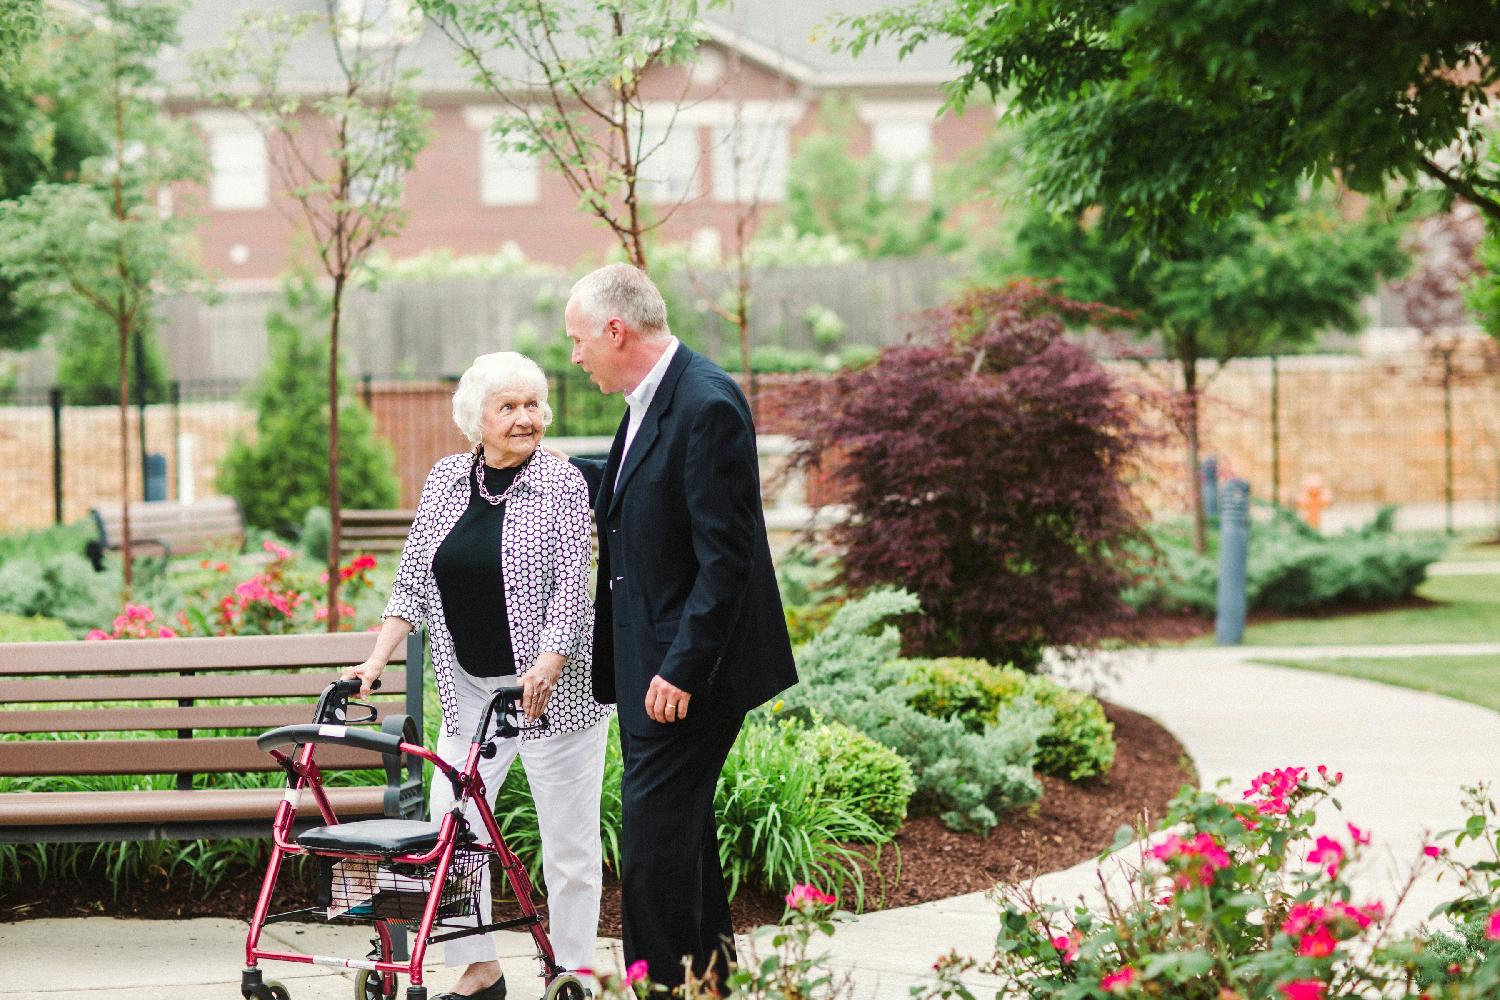 A senior couple takes a walk through the community’s courtyard.